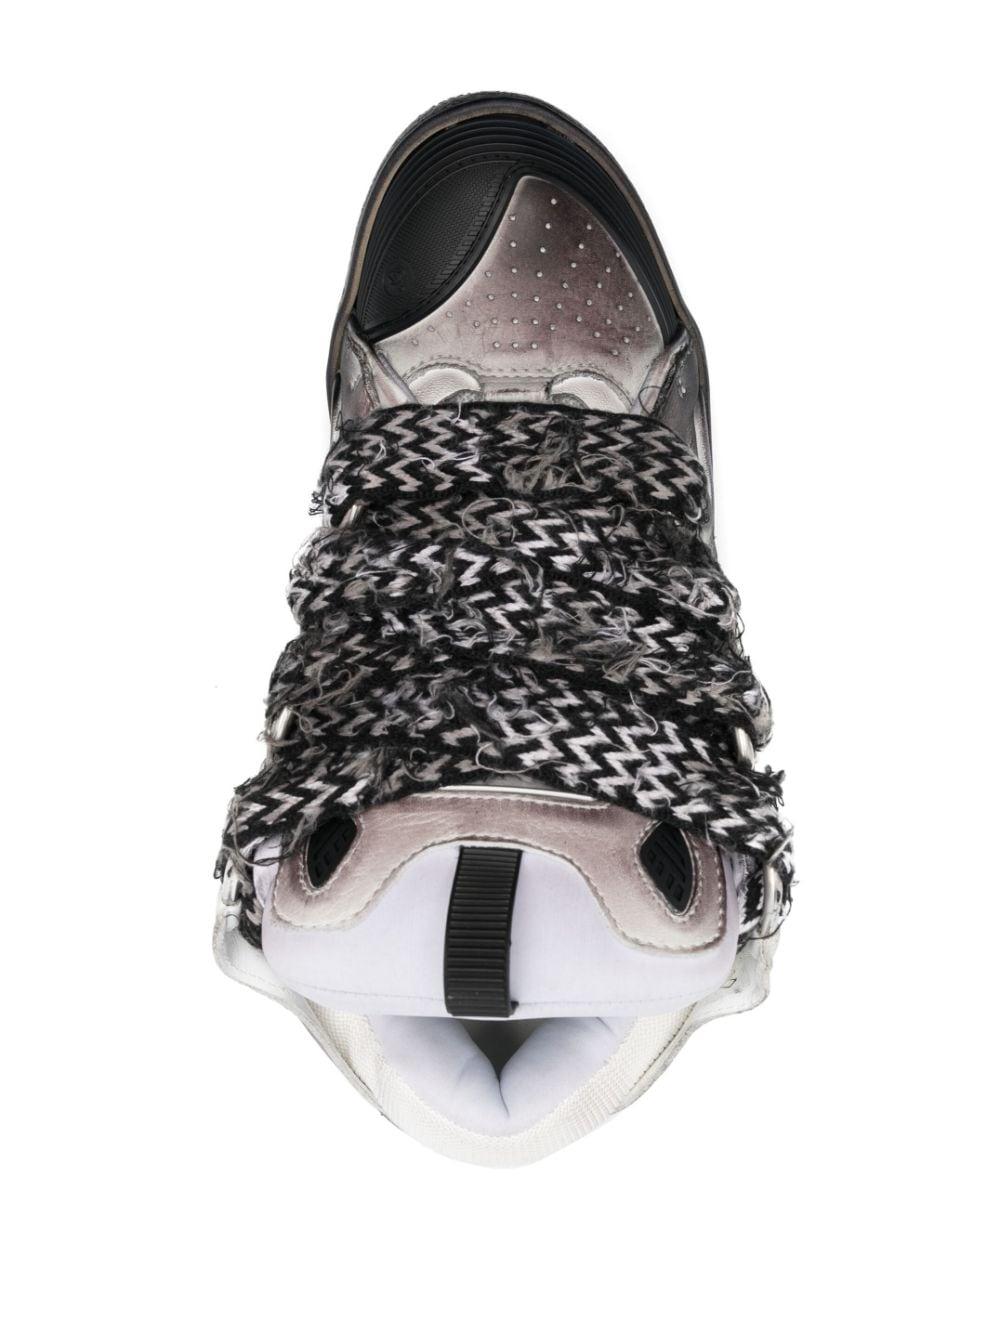 Lanvin X Antonioli Curb Sneakers in Black for Men